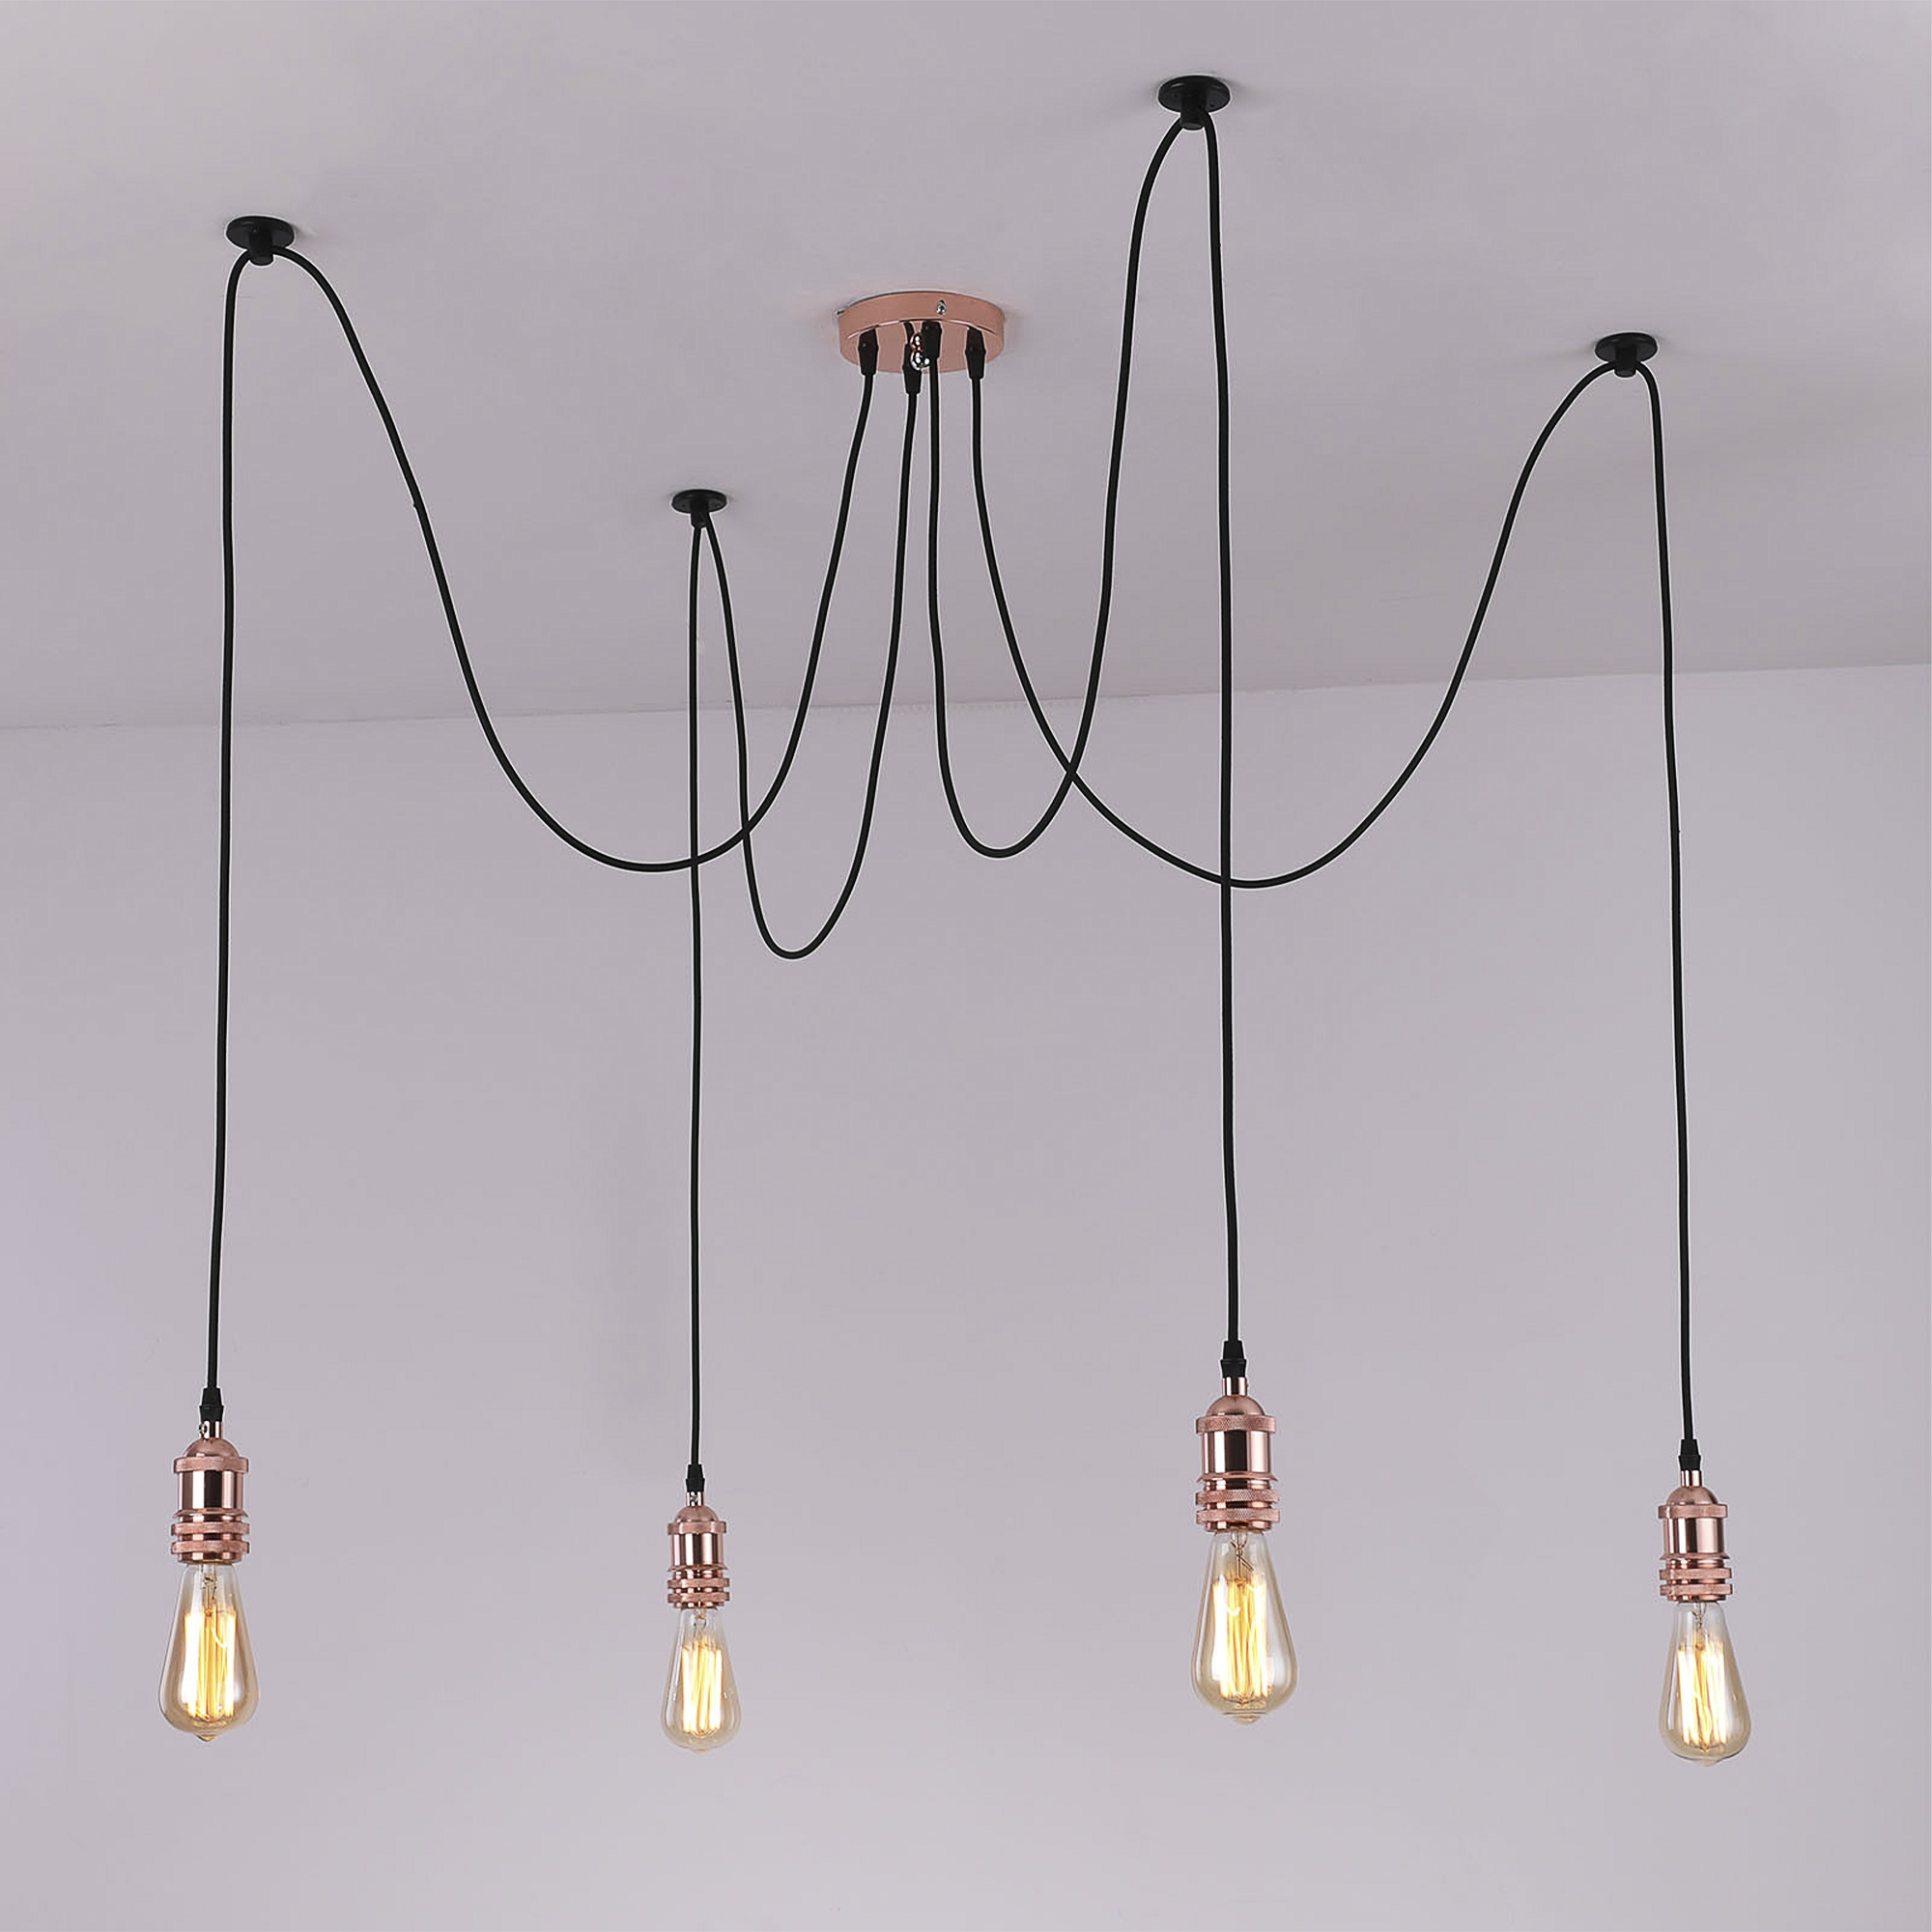 Modern Retro Industrial Vintage Spider Pendant Edison Ceiling Light Lamp Cluster